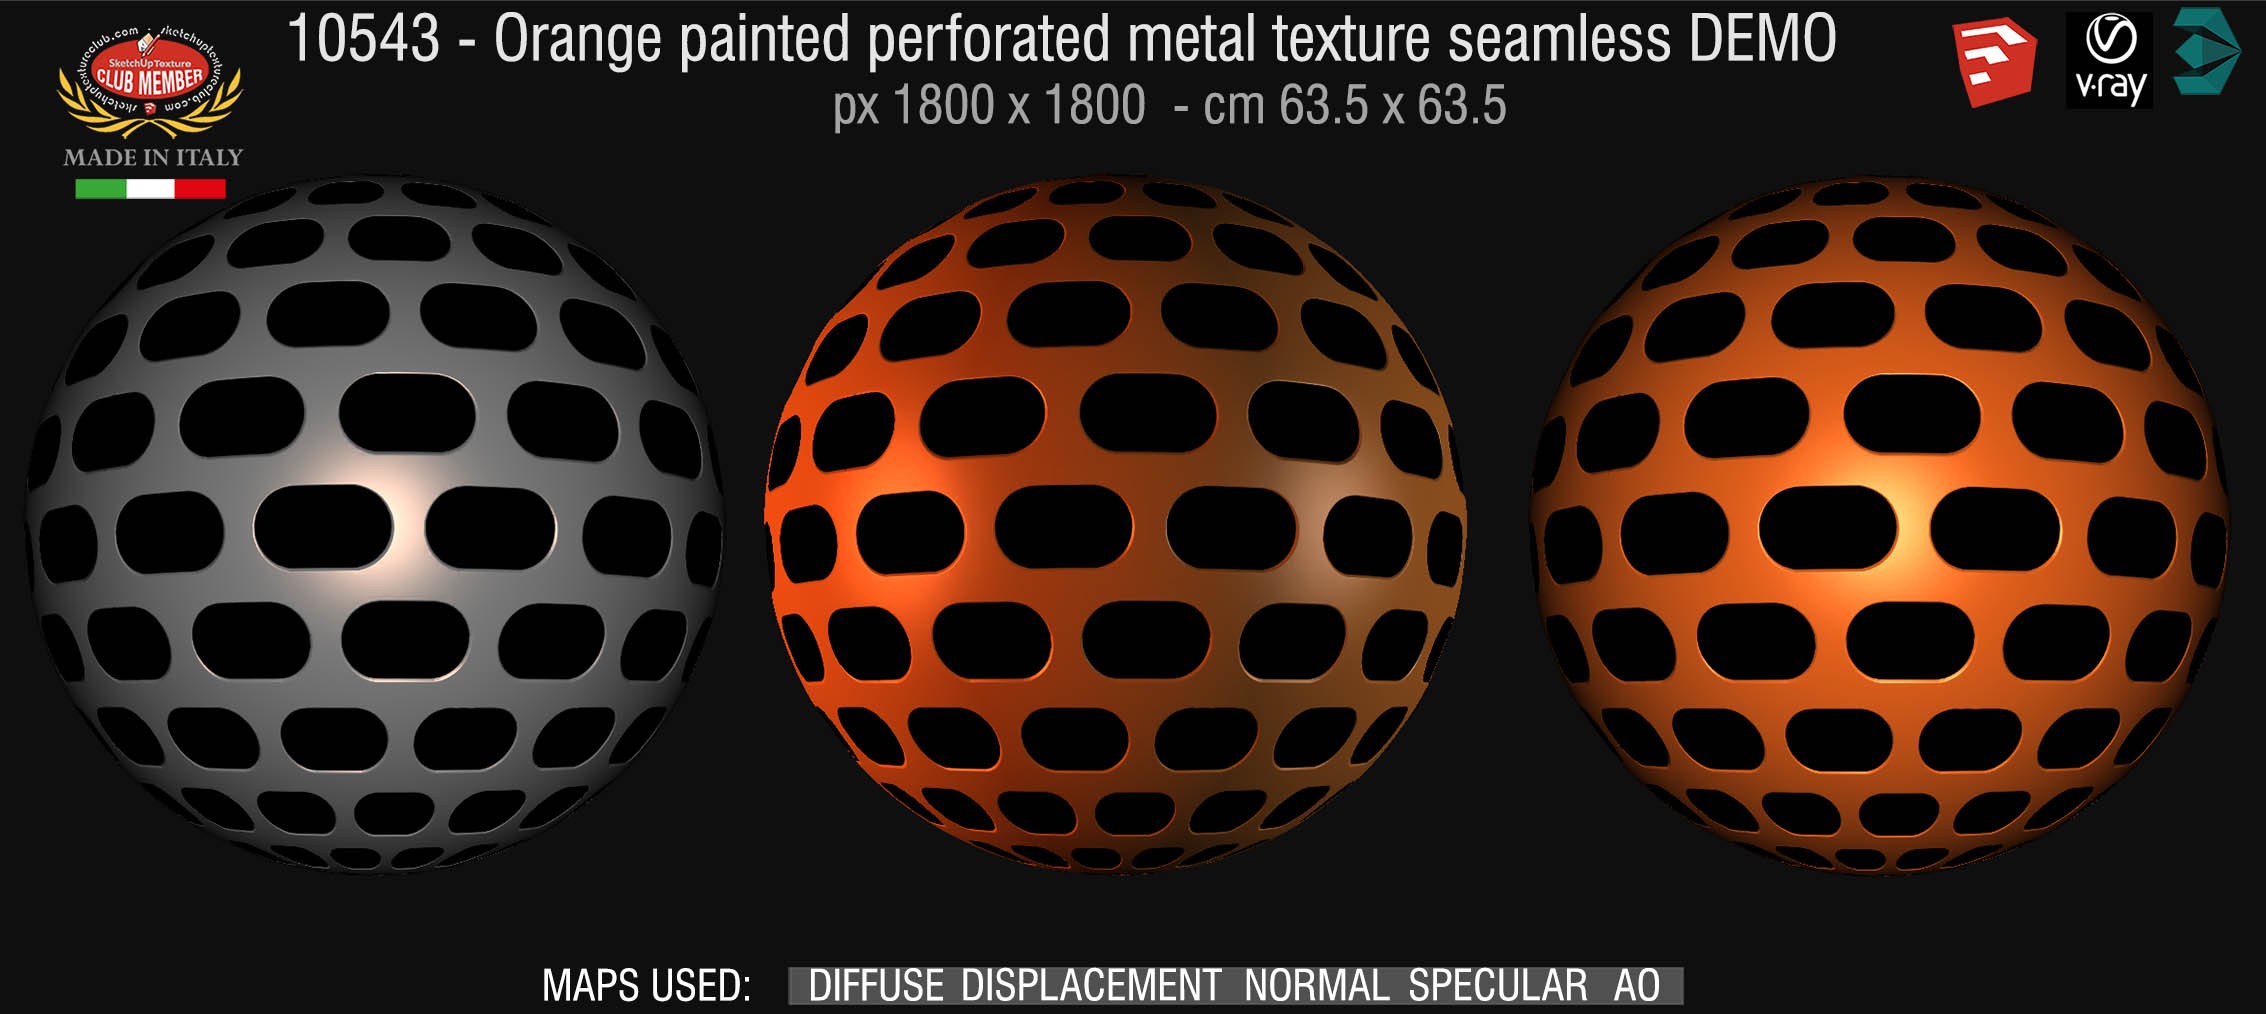 10543 HR Orange painted panited perforate metal texture seamless + maps DEMO